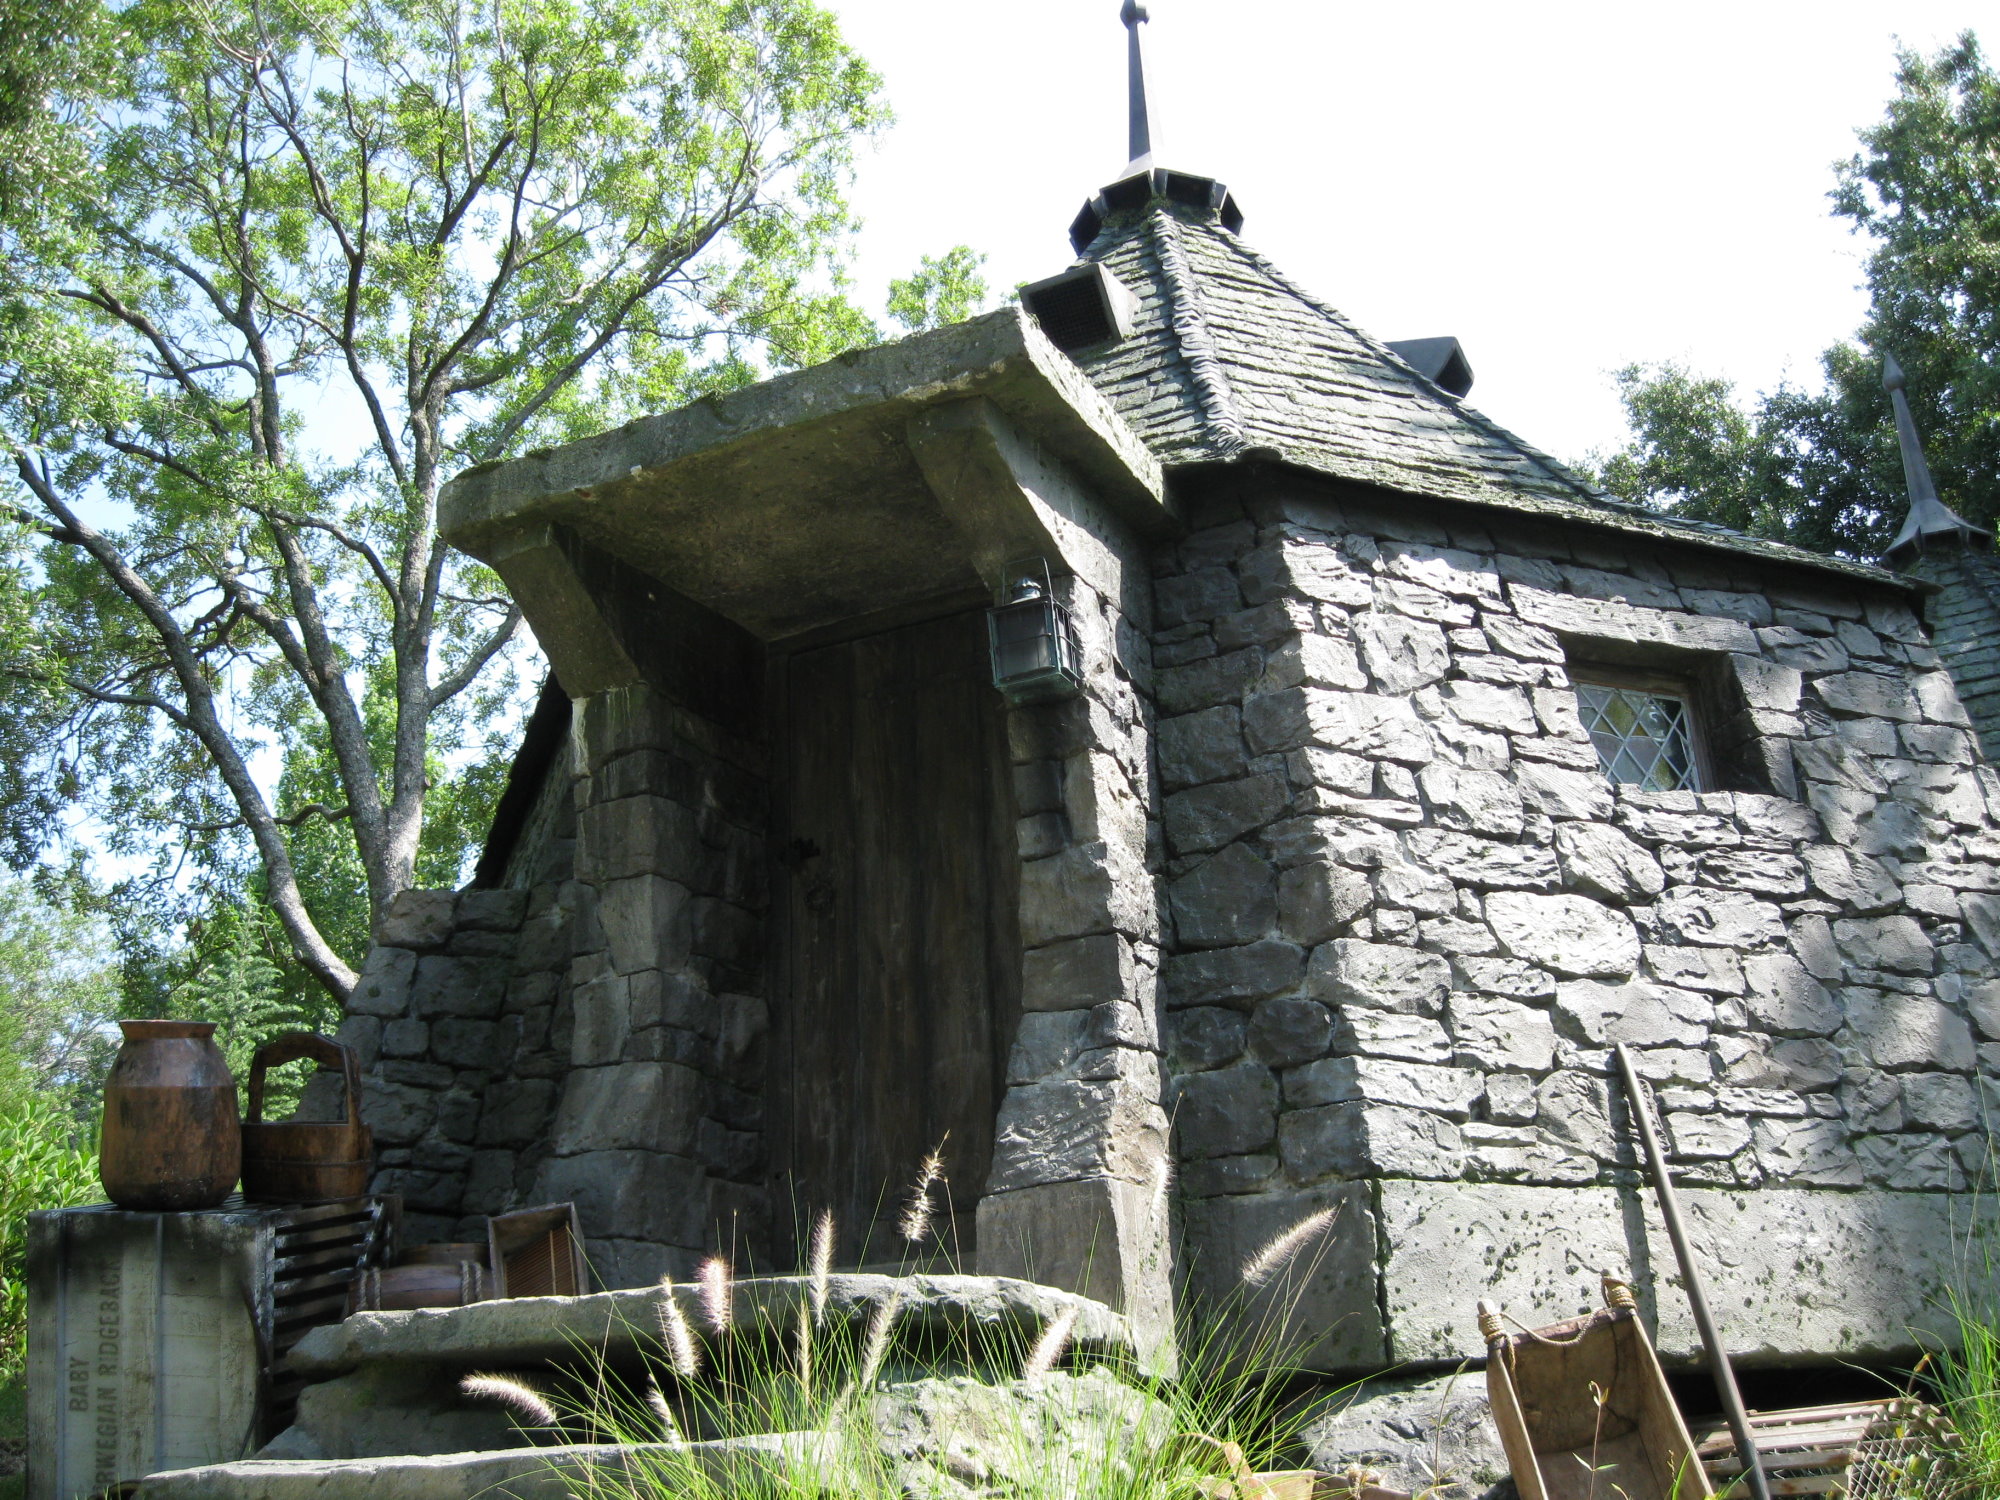 Wizarding World of Harry Potter - Hagrid's Cottage